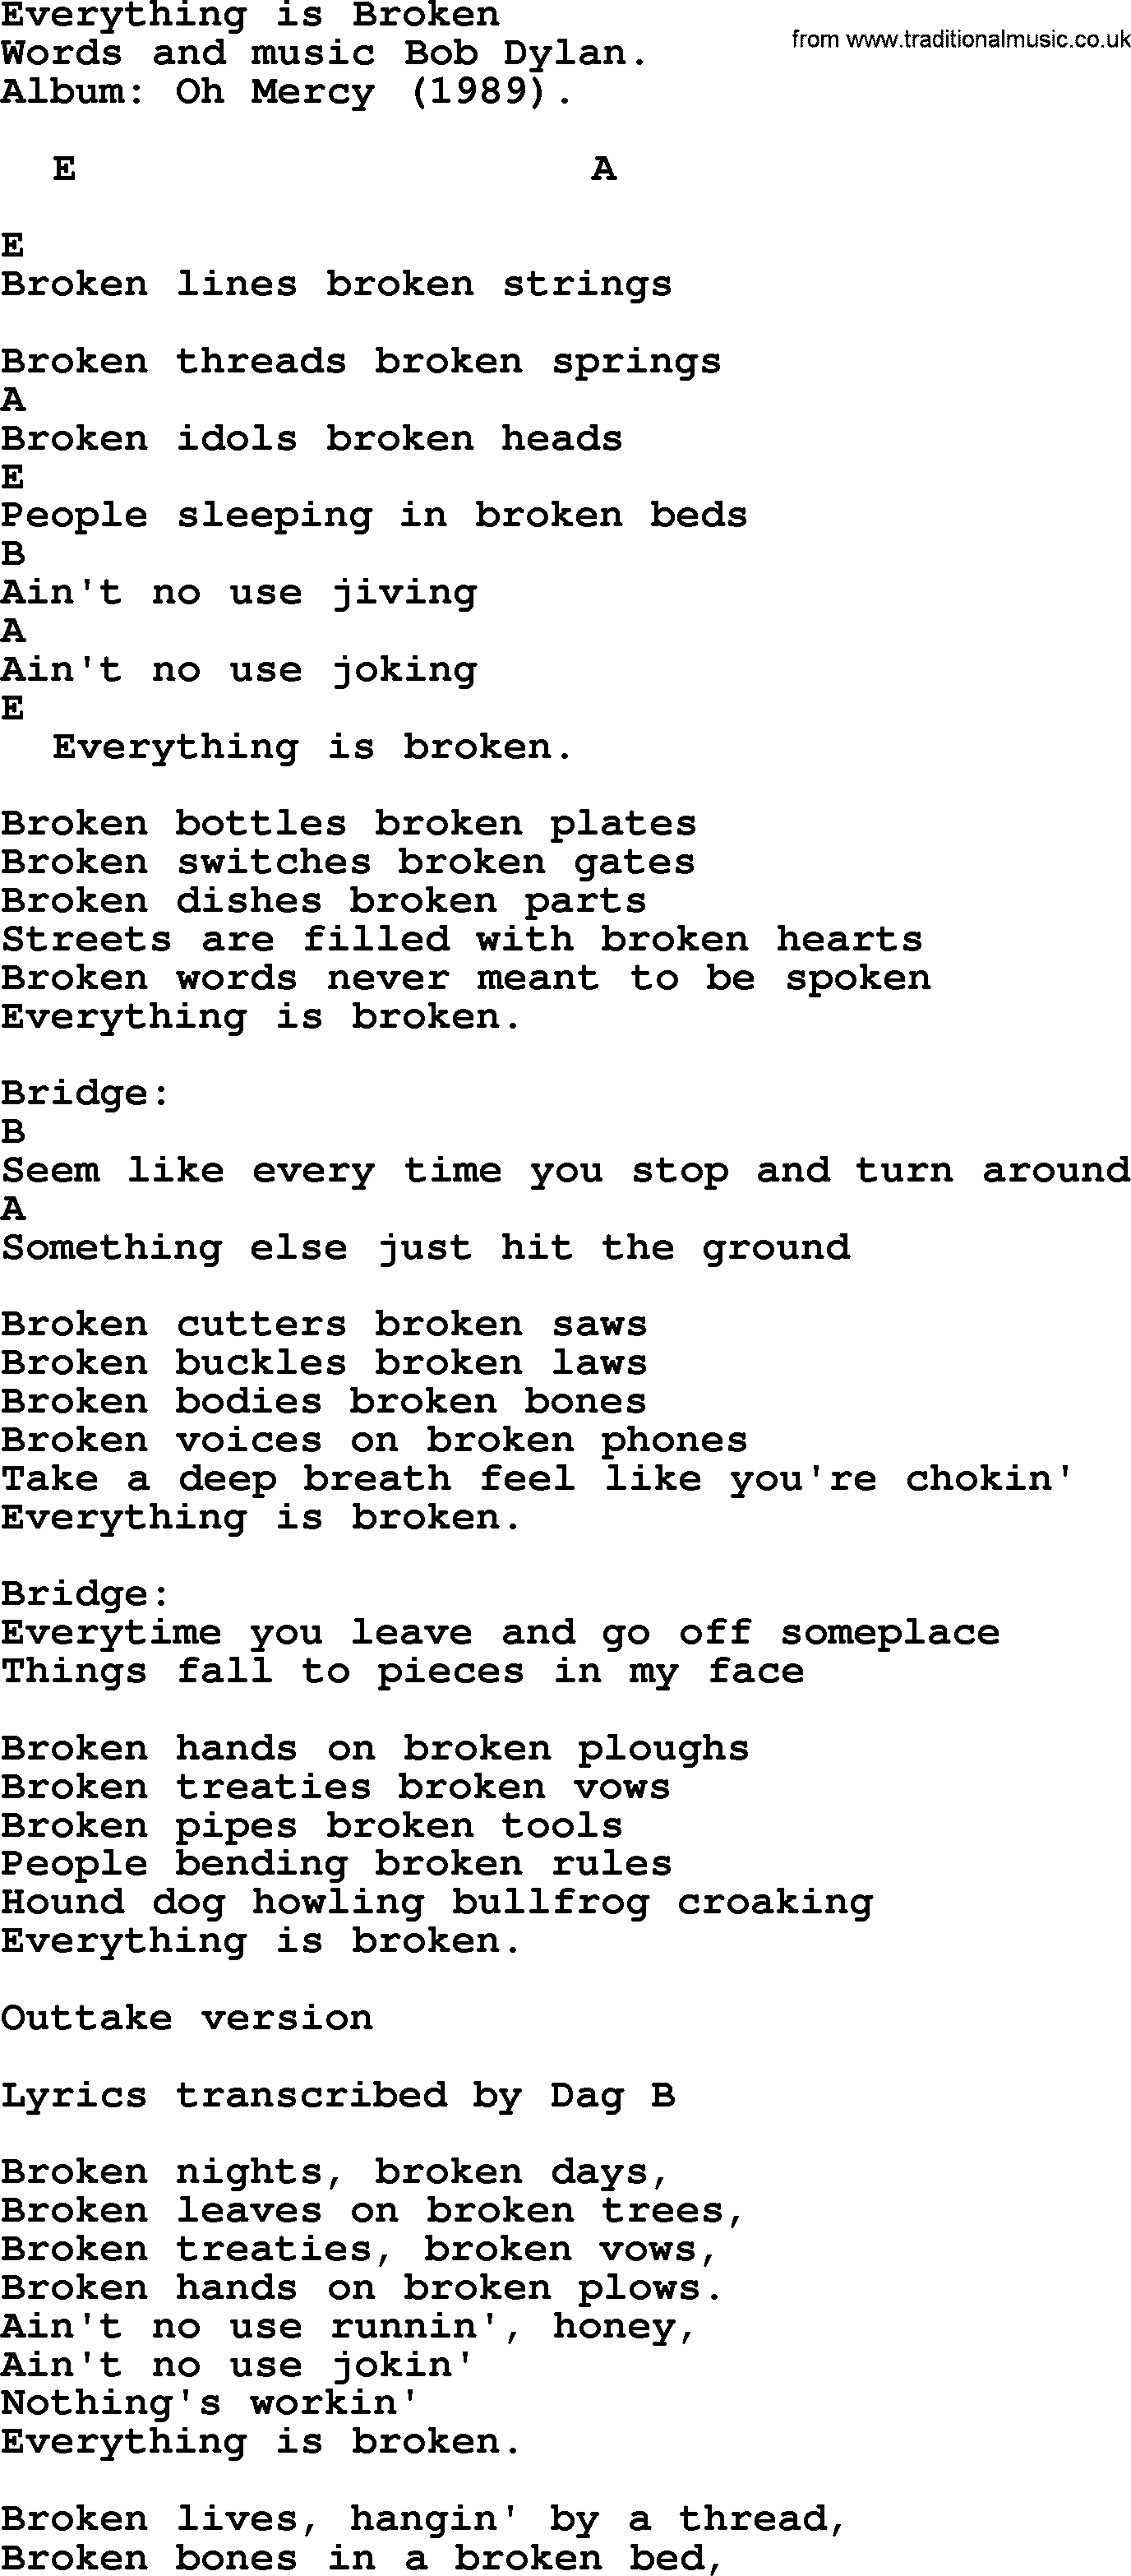 Bob Dylan song - Everything is Broken, lyrics and chords lyrics for broken by kaestrings